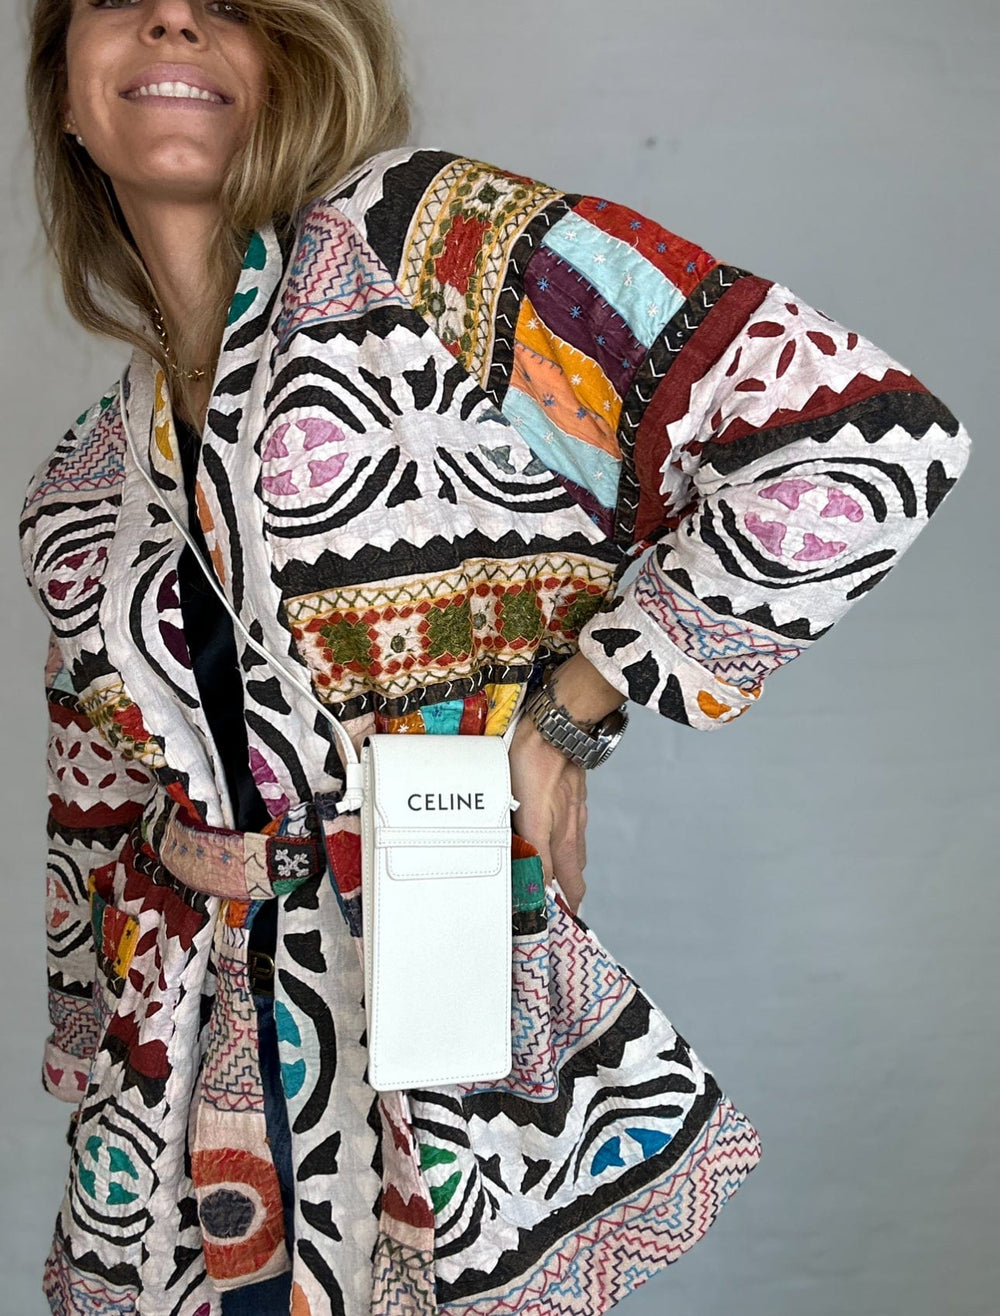 Sissel Edelbo Jakker Sissel Edelbo - Marrakesh patchwork jacket - No. 140